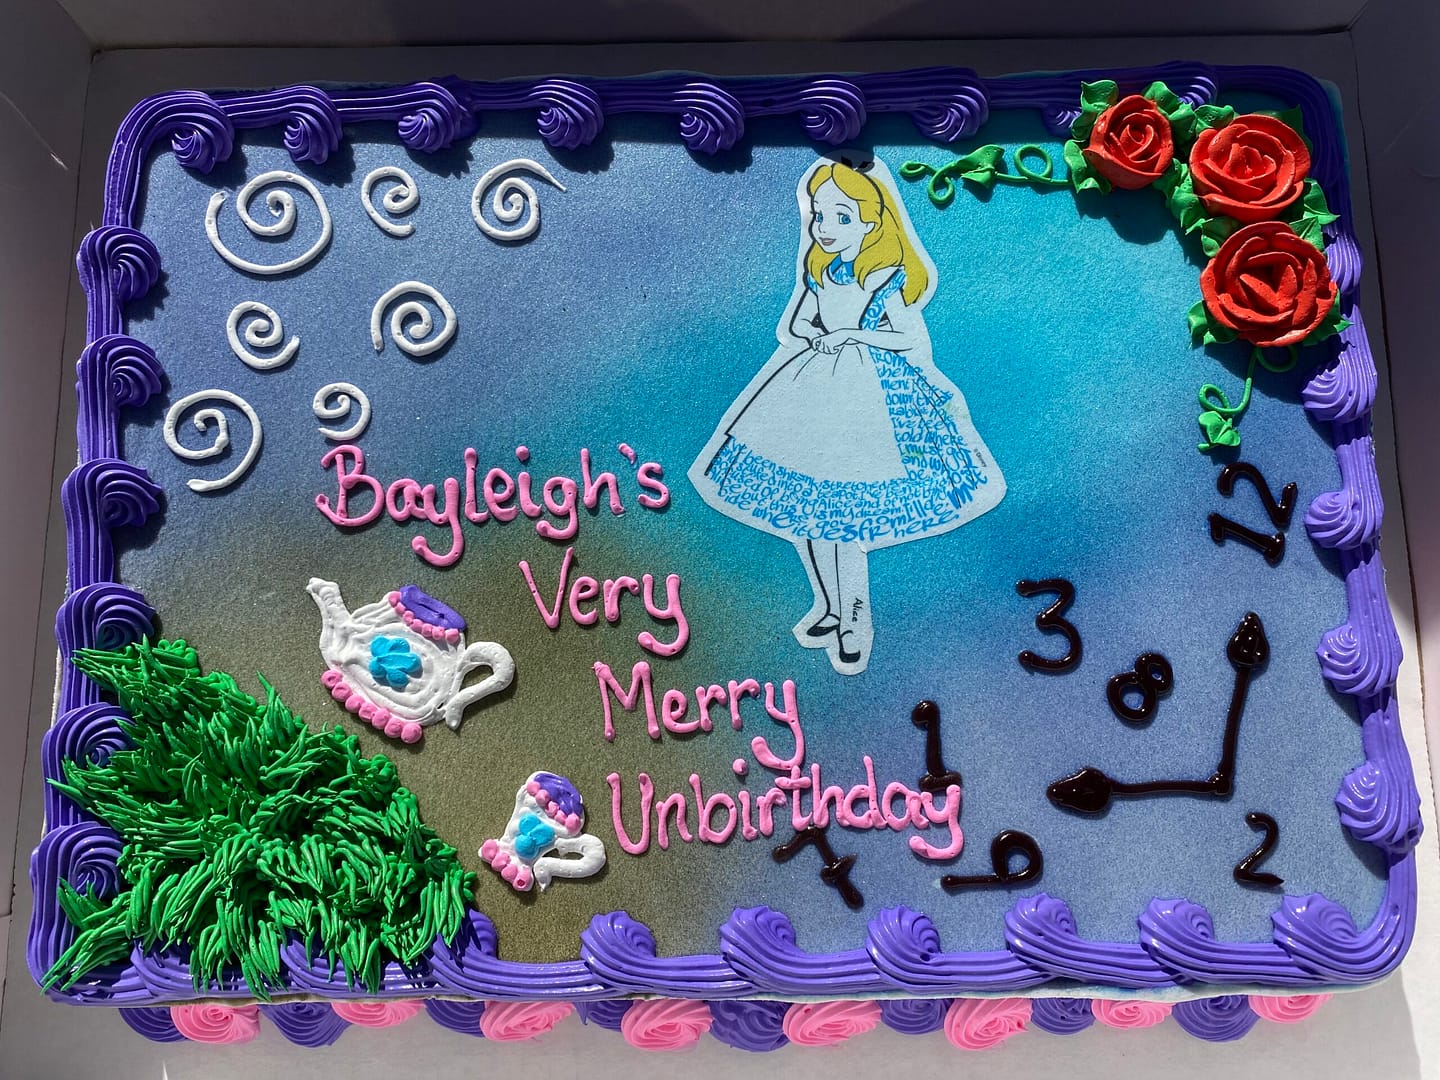 very merry unbirthday alice in wonderland Onederland birthday cake